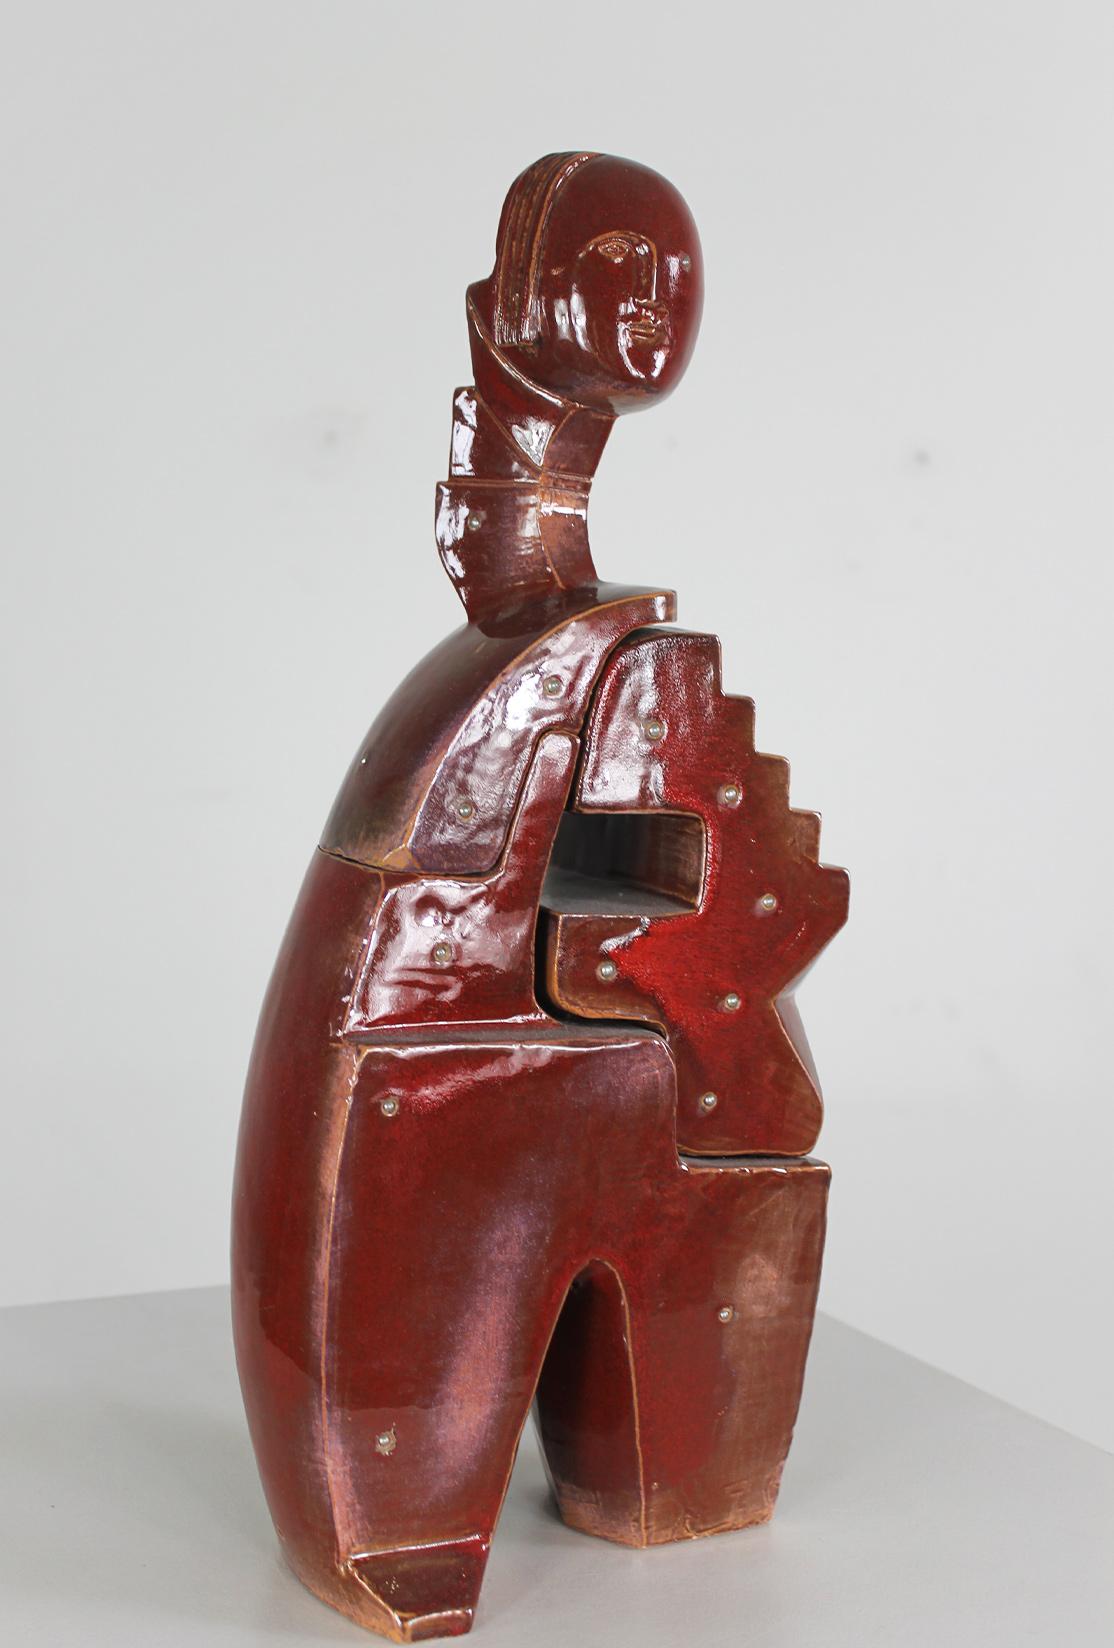 Fabio Provinciali Sculpture in Glazed Terracotta with Metal Studs 1999  For Sale 1